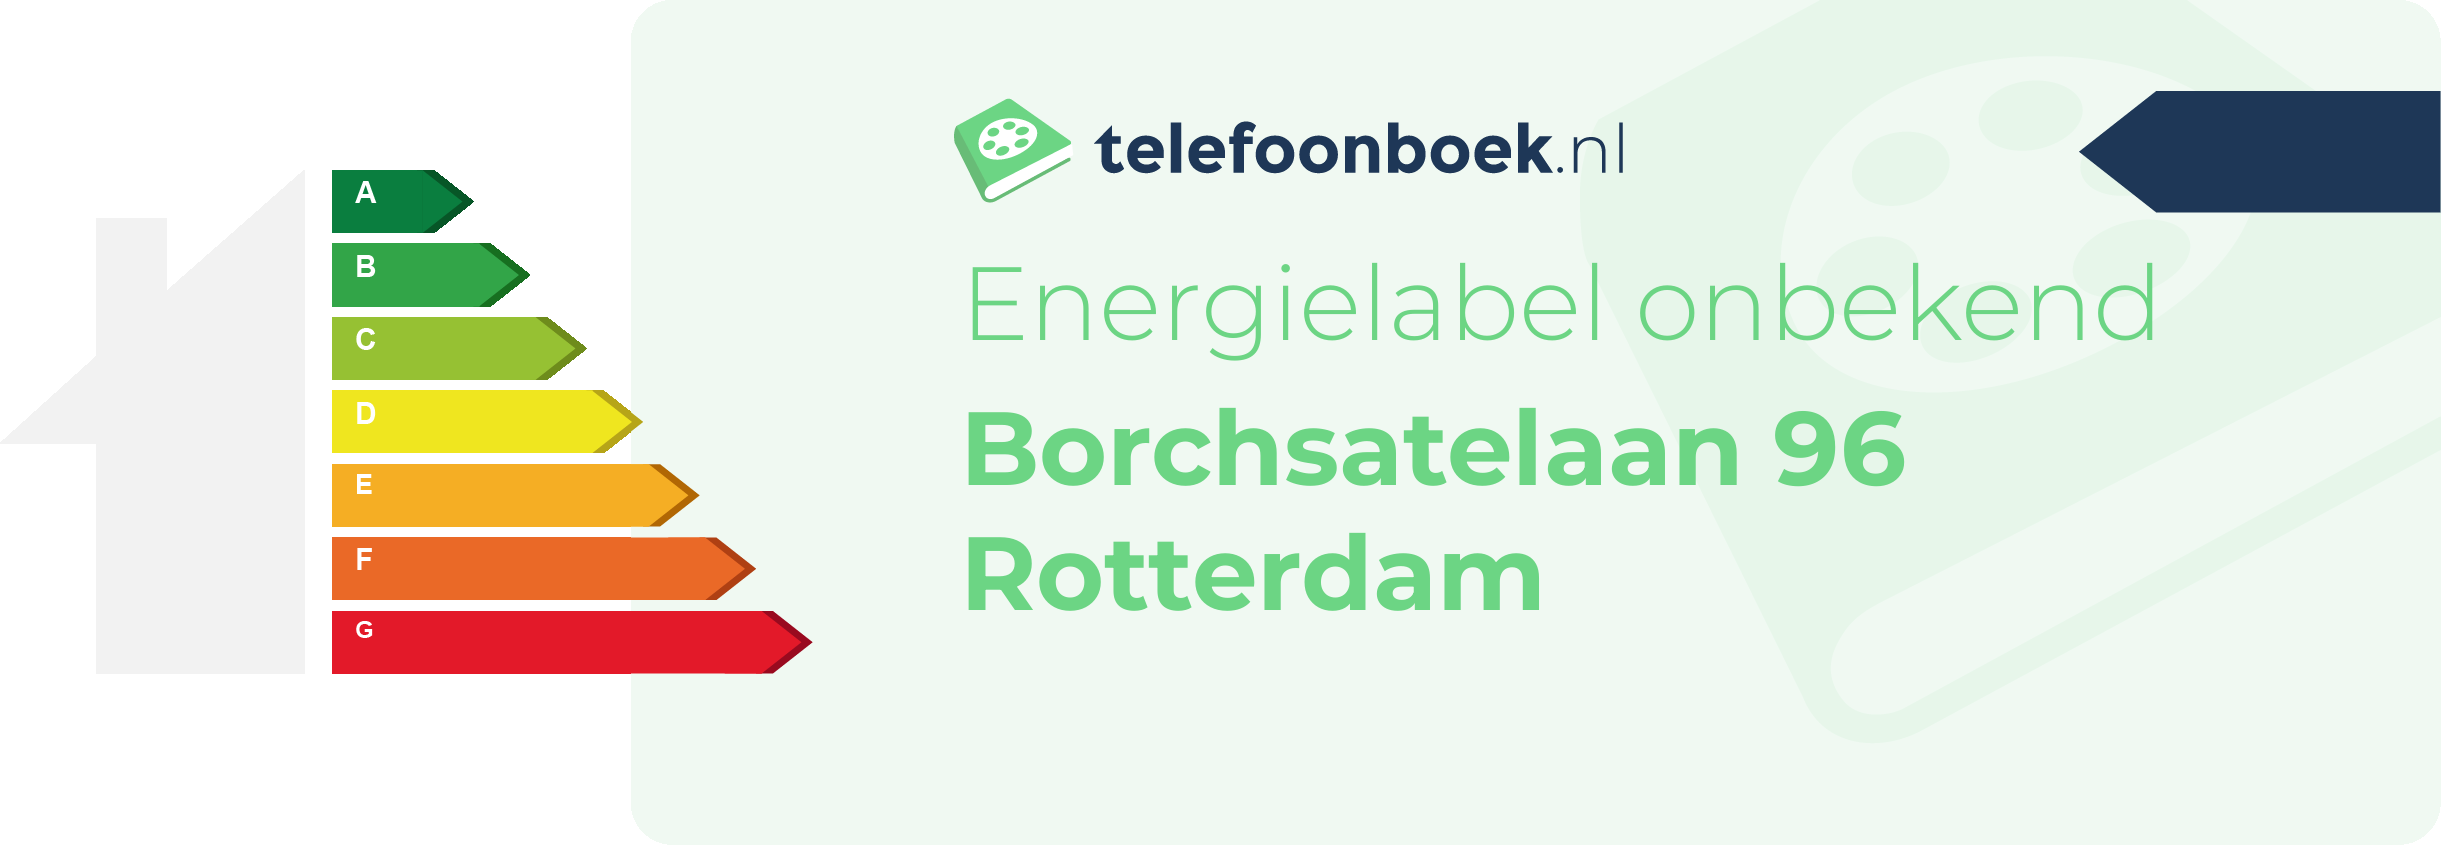 Energielabel Borchsatelaan 96 Rotterdam